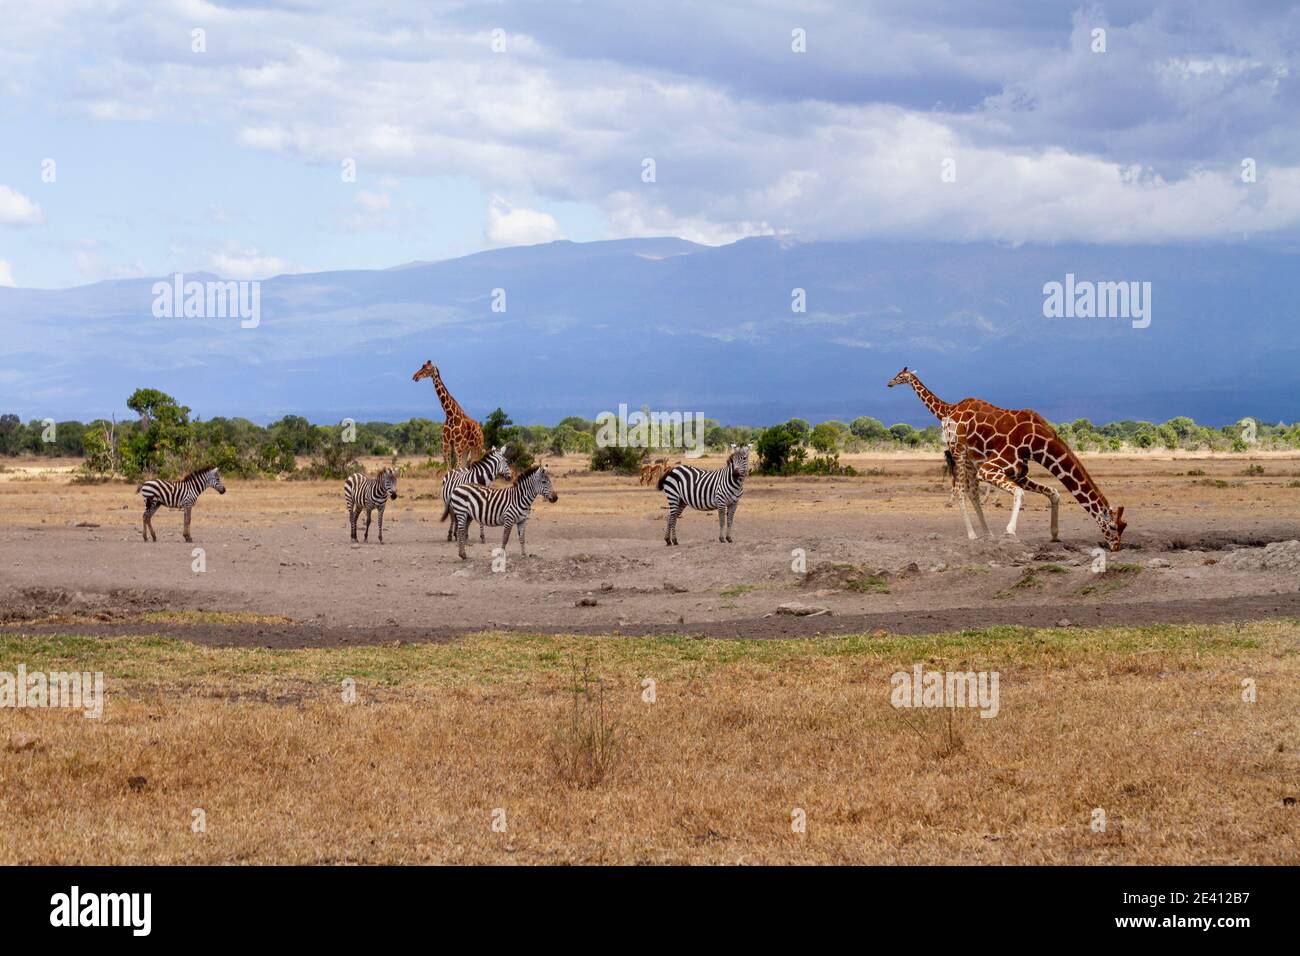 Giraffe bends to drink  water from waterhole while zebras and more giraffes wait in orderly queue. Ol Pejeta Conservancy, Kenya. African bush savannah Stock Photo